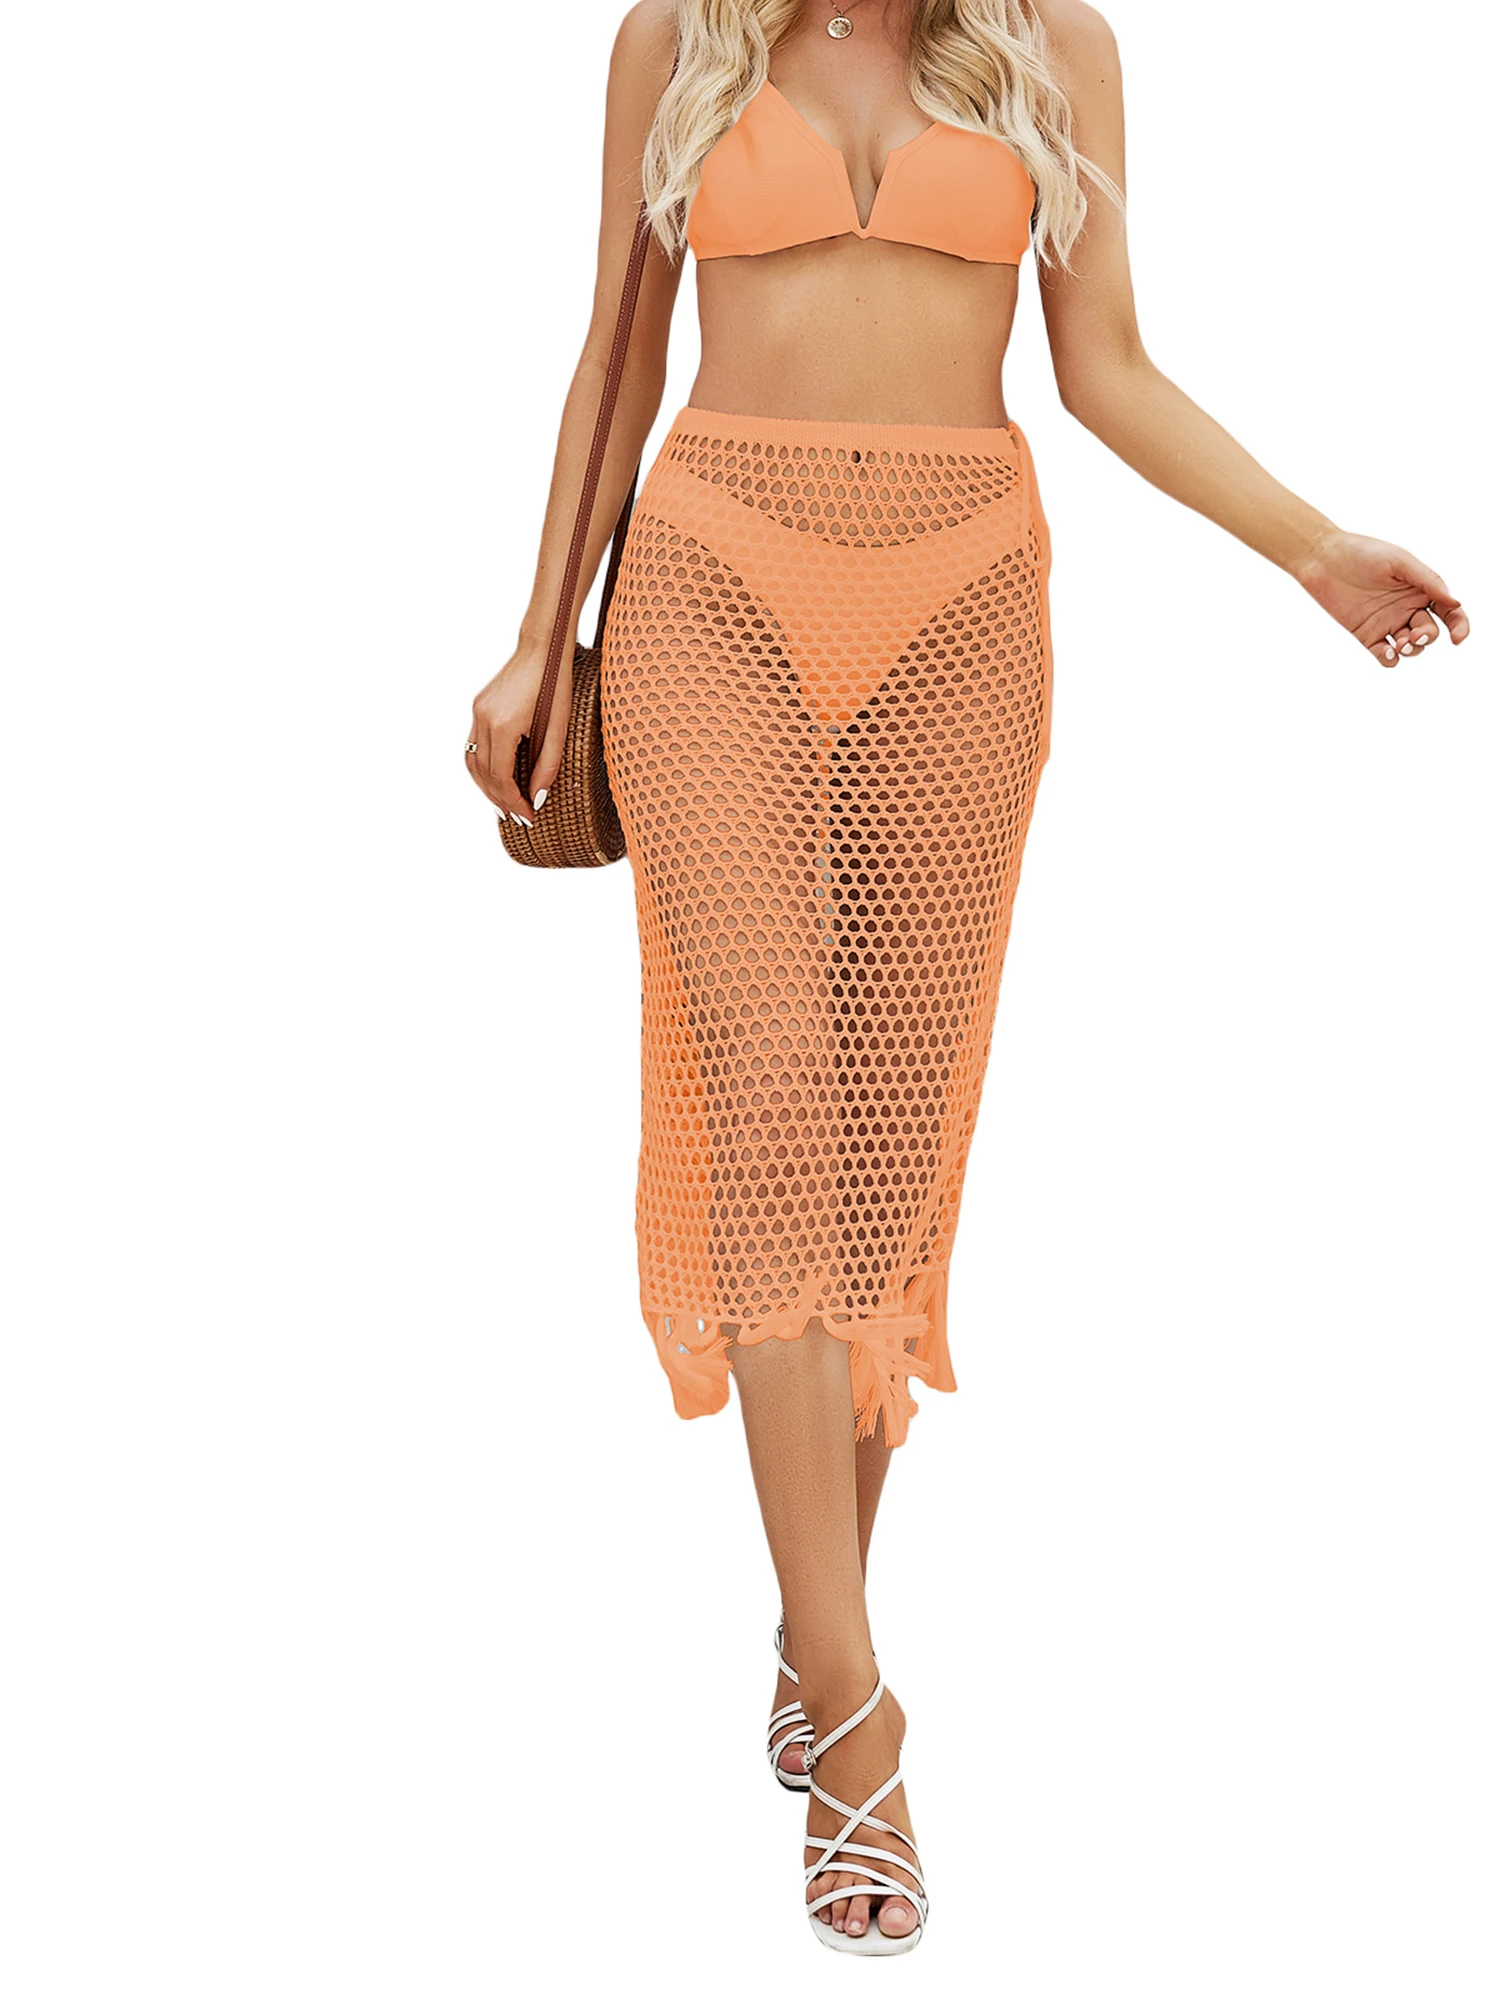 

Hollow Out Crochet Sarong Beach Skirts Summer Bikinis Cover-ups Women High Waist Bandage Tassel Hem Wrapped Midi Skirts